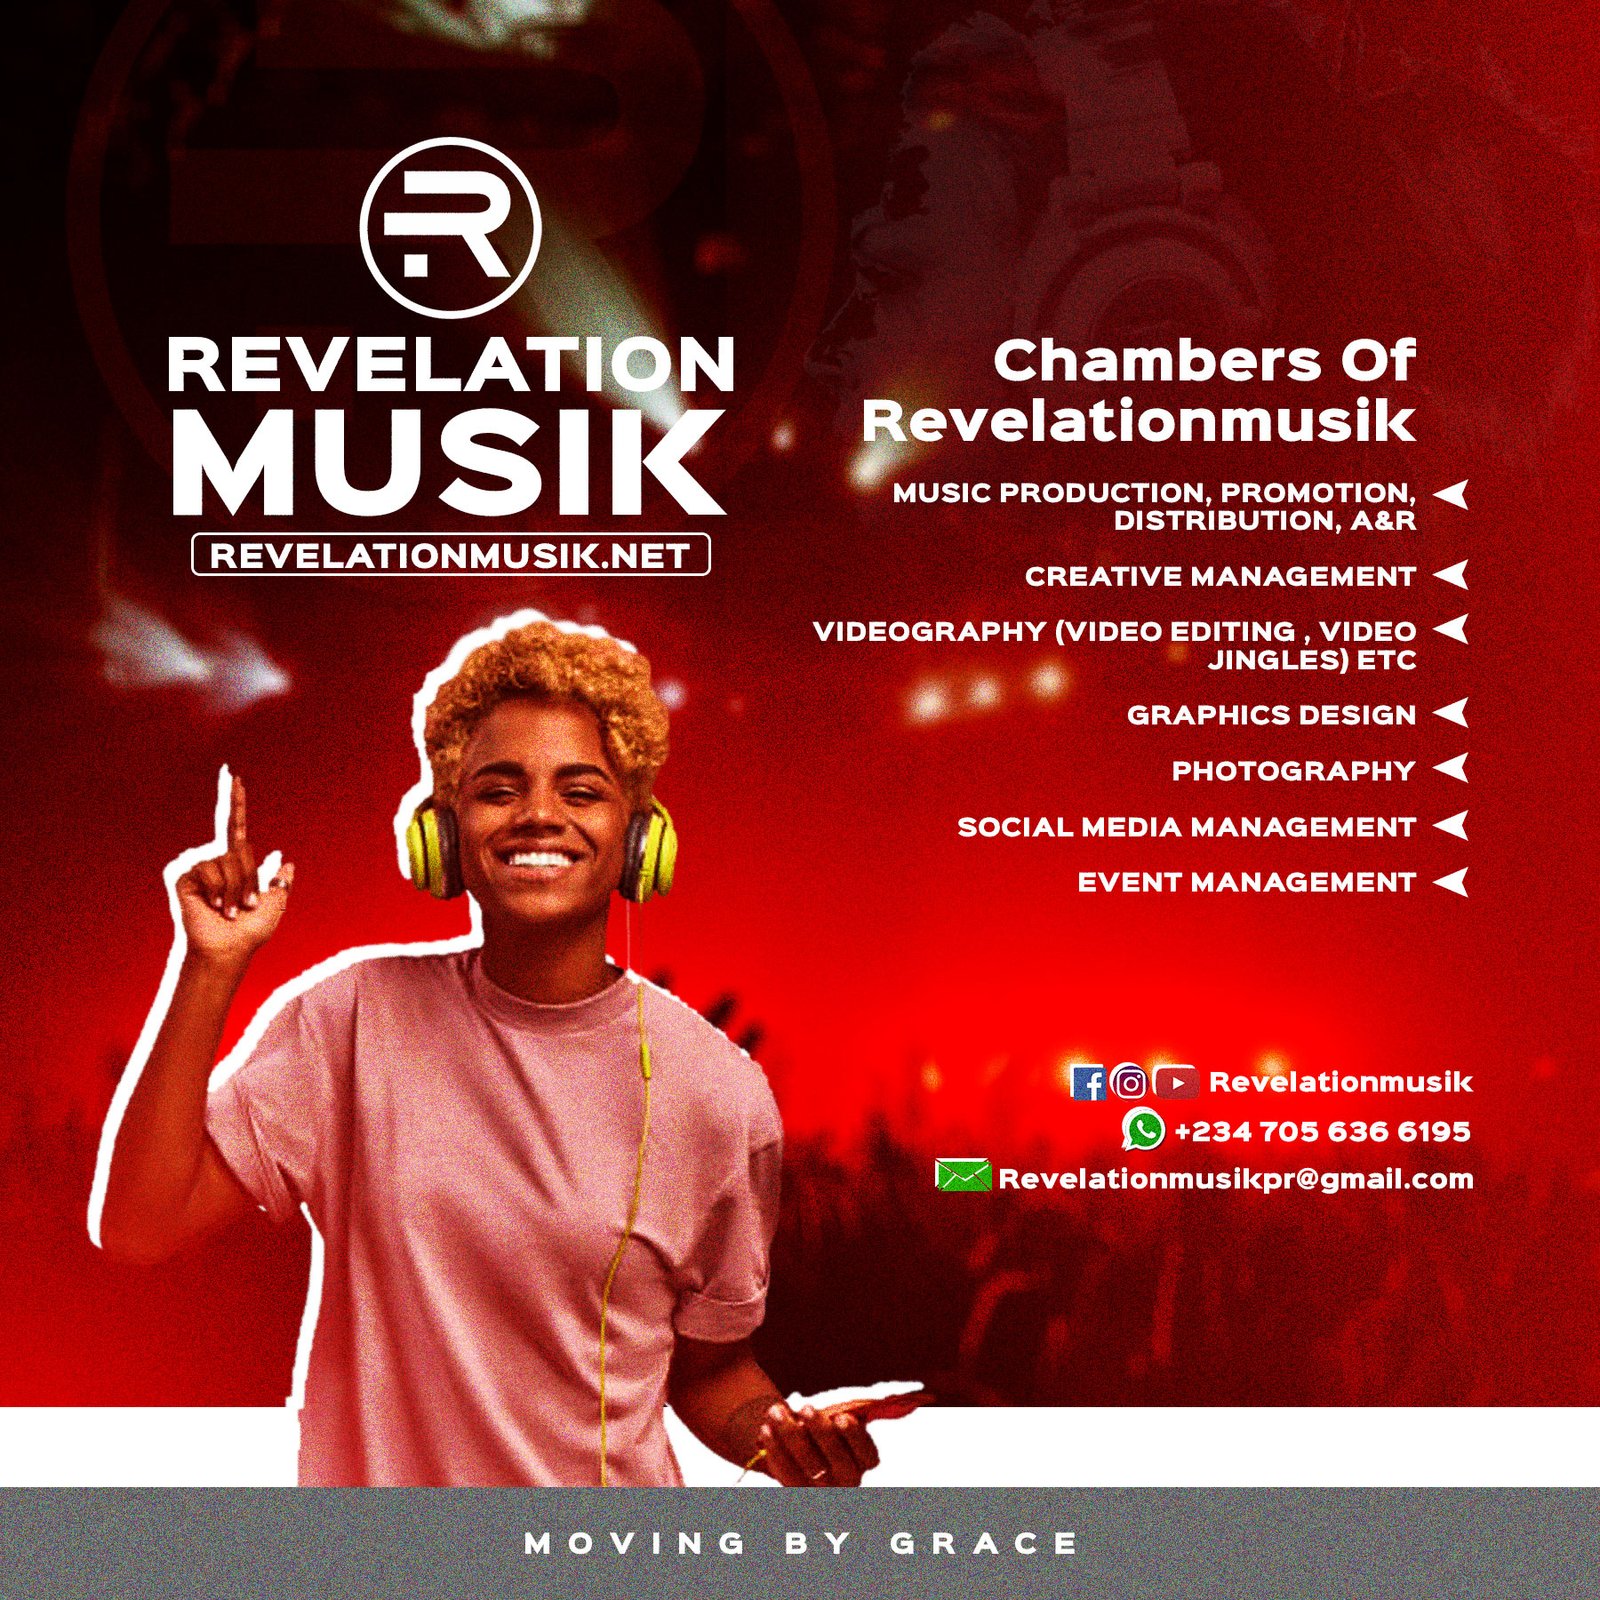 Nigerian Worship Songs - Latest Nigerian Gospel Music mp3 Downloads